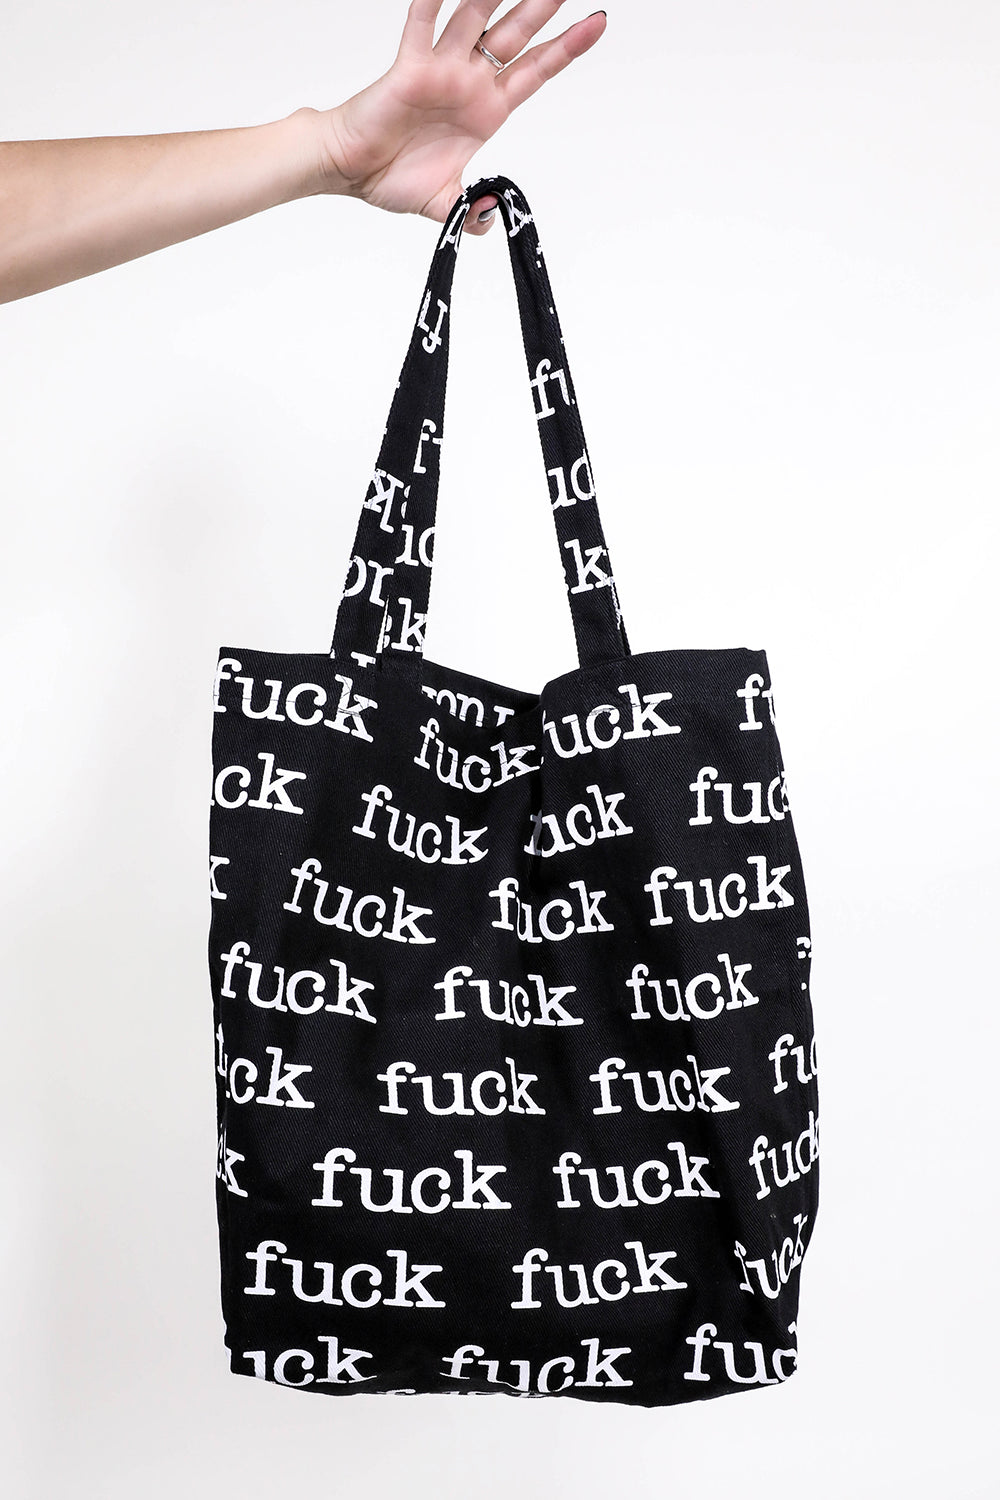 FUCK Tote Bag